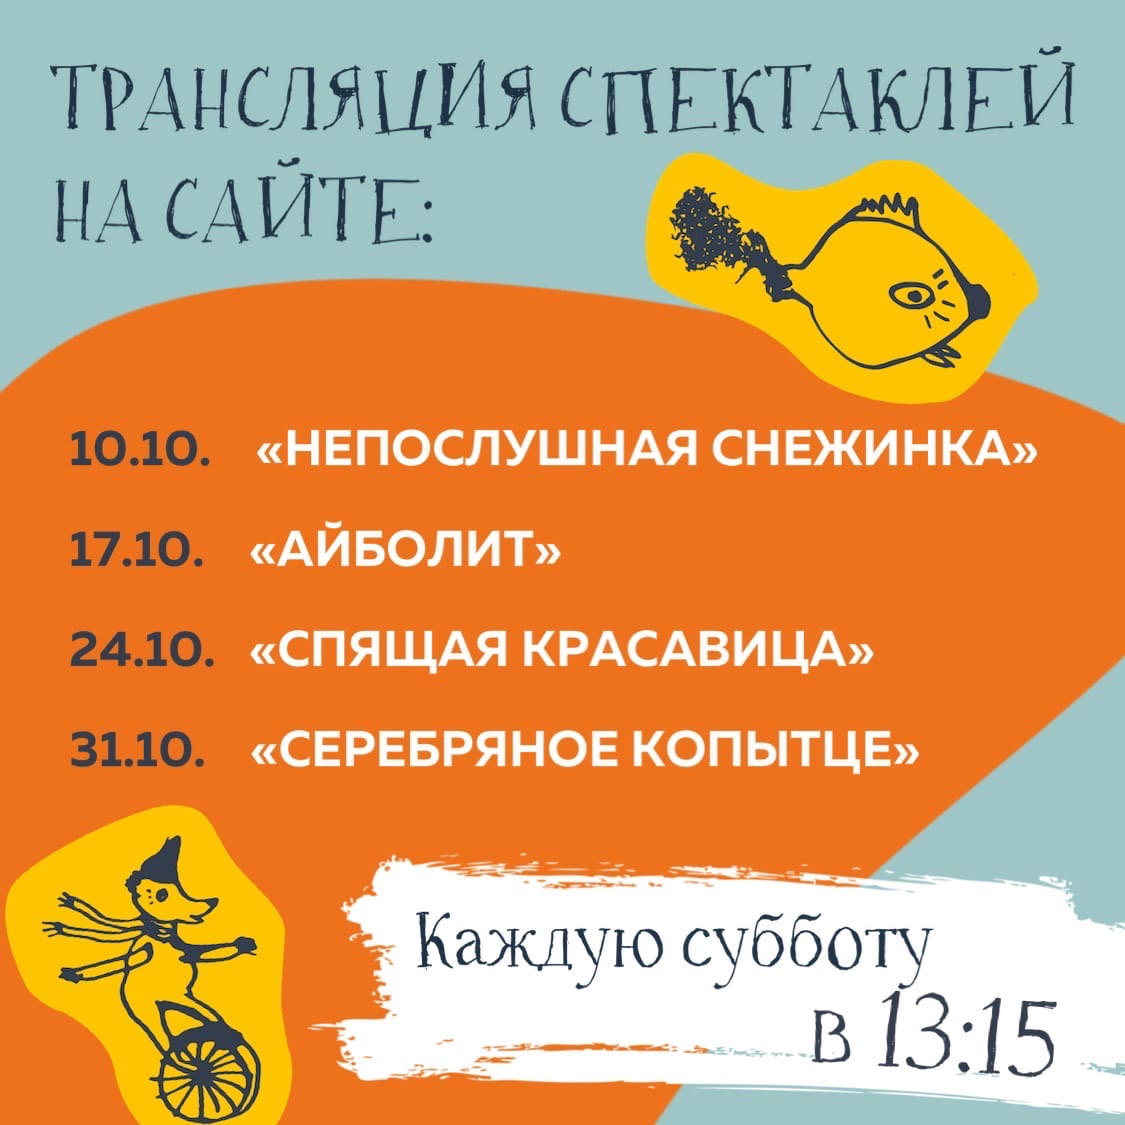 Ханты-Мансийский театр кукол будет онлайн весь октябрь